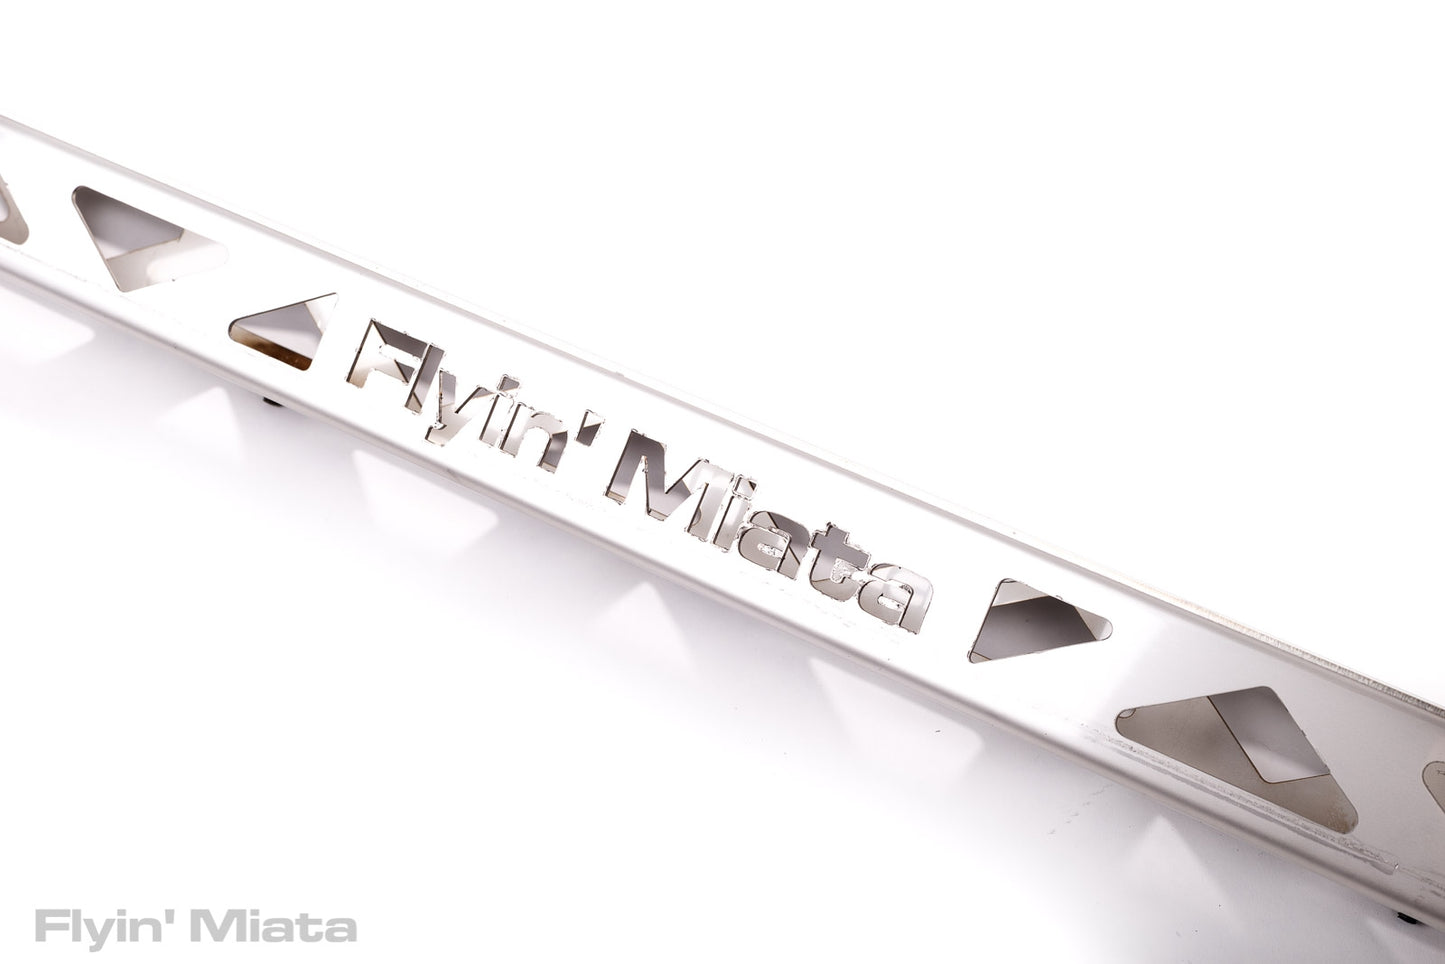 Flyin' Miata frame rails v2.0